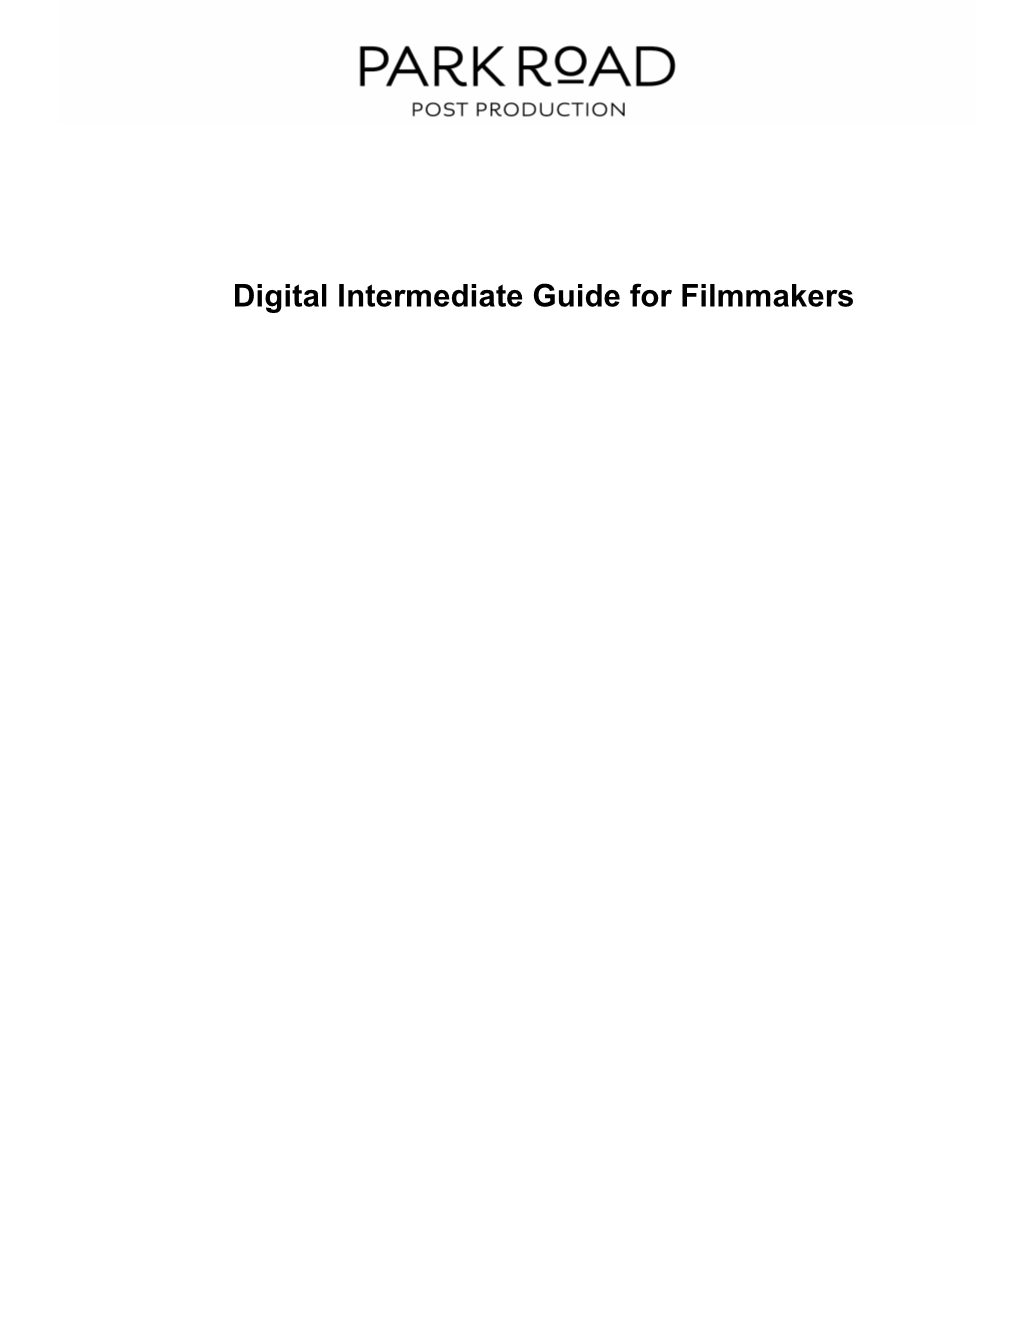 Digital Intermediate Guide for Filmmakers